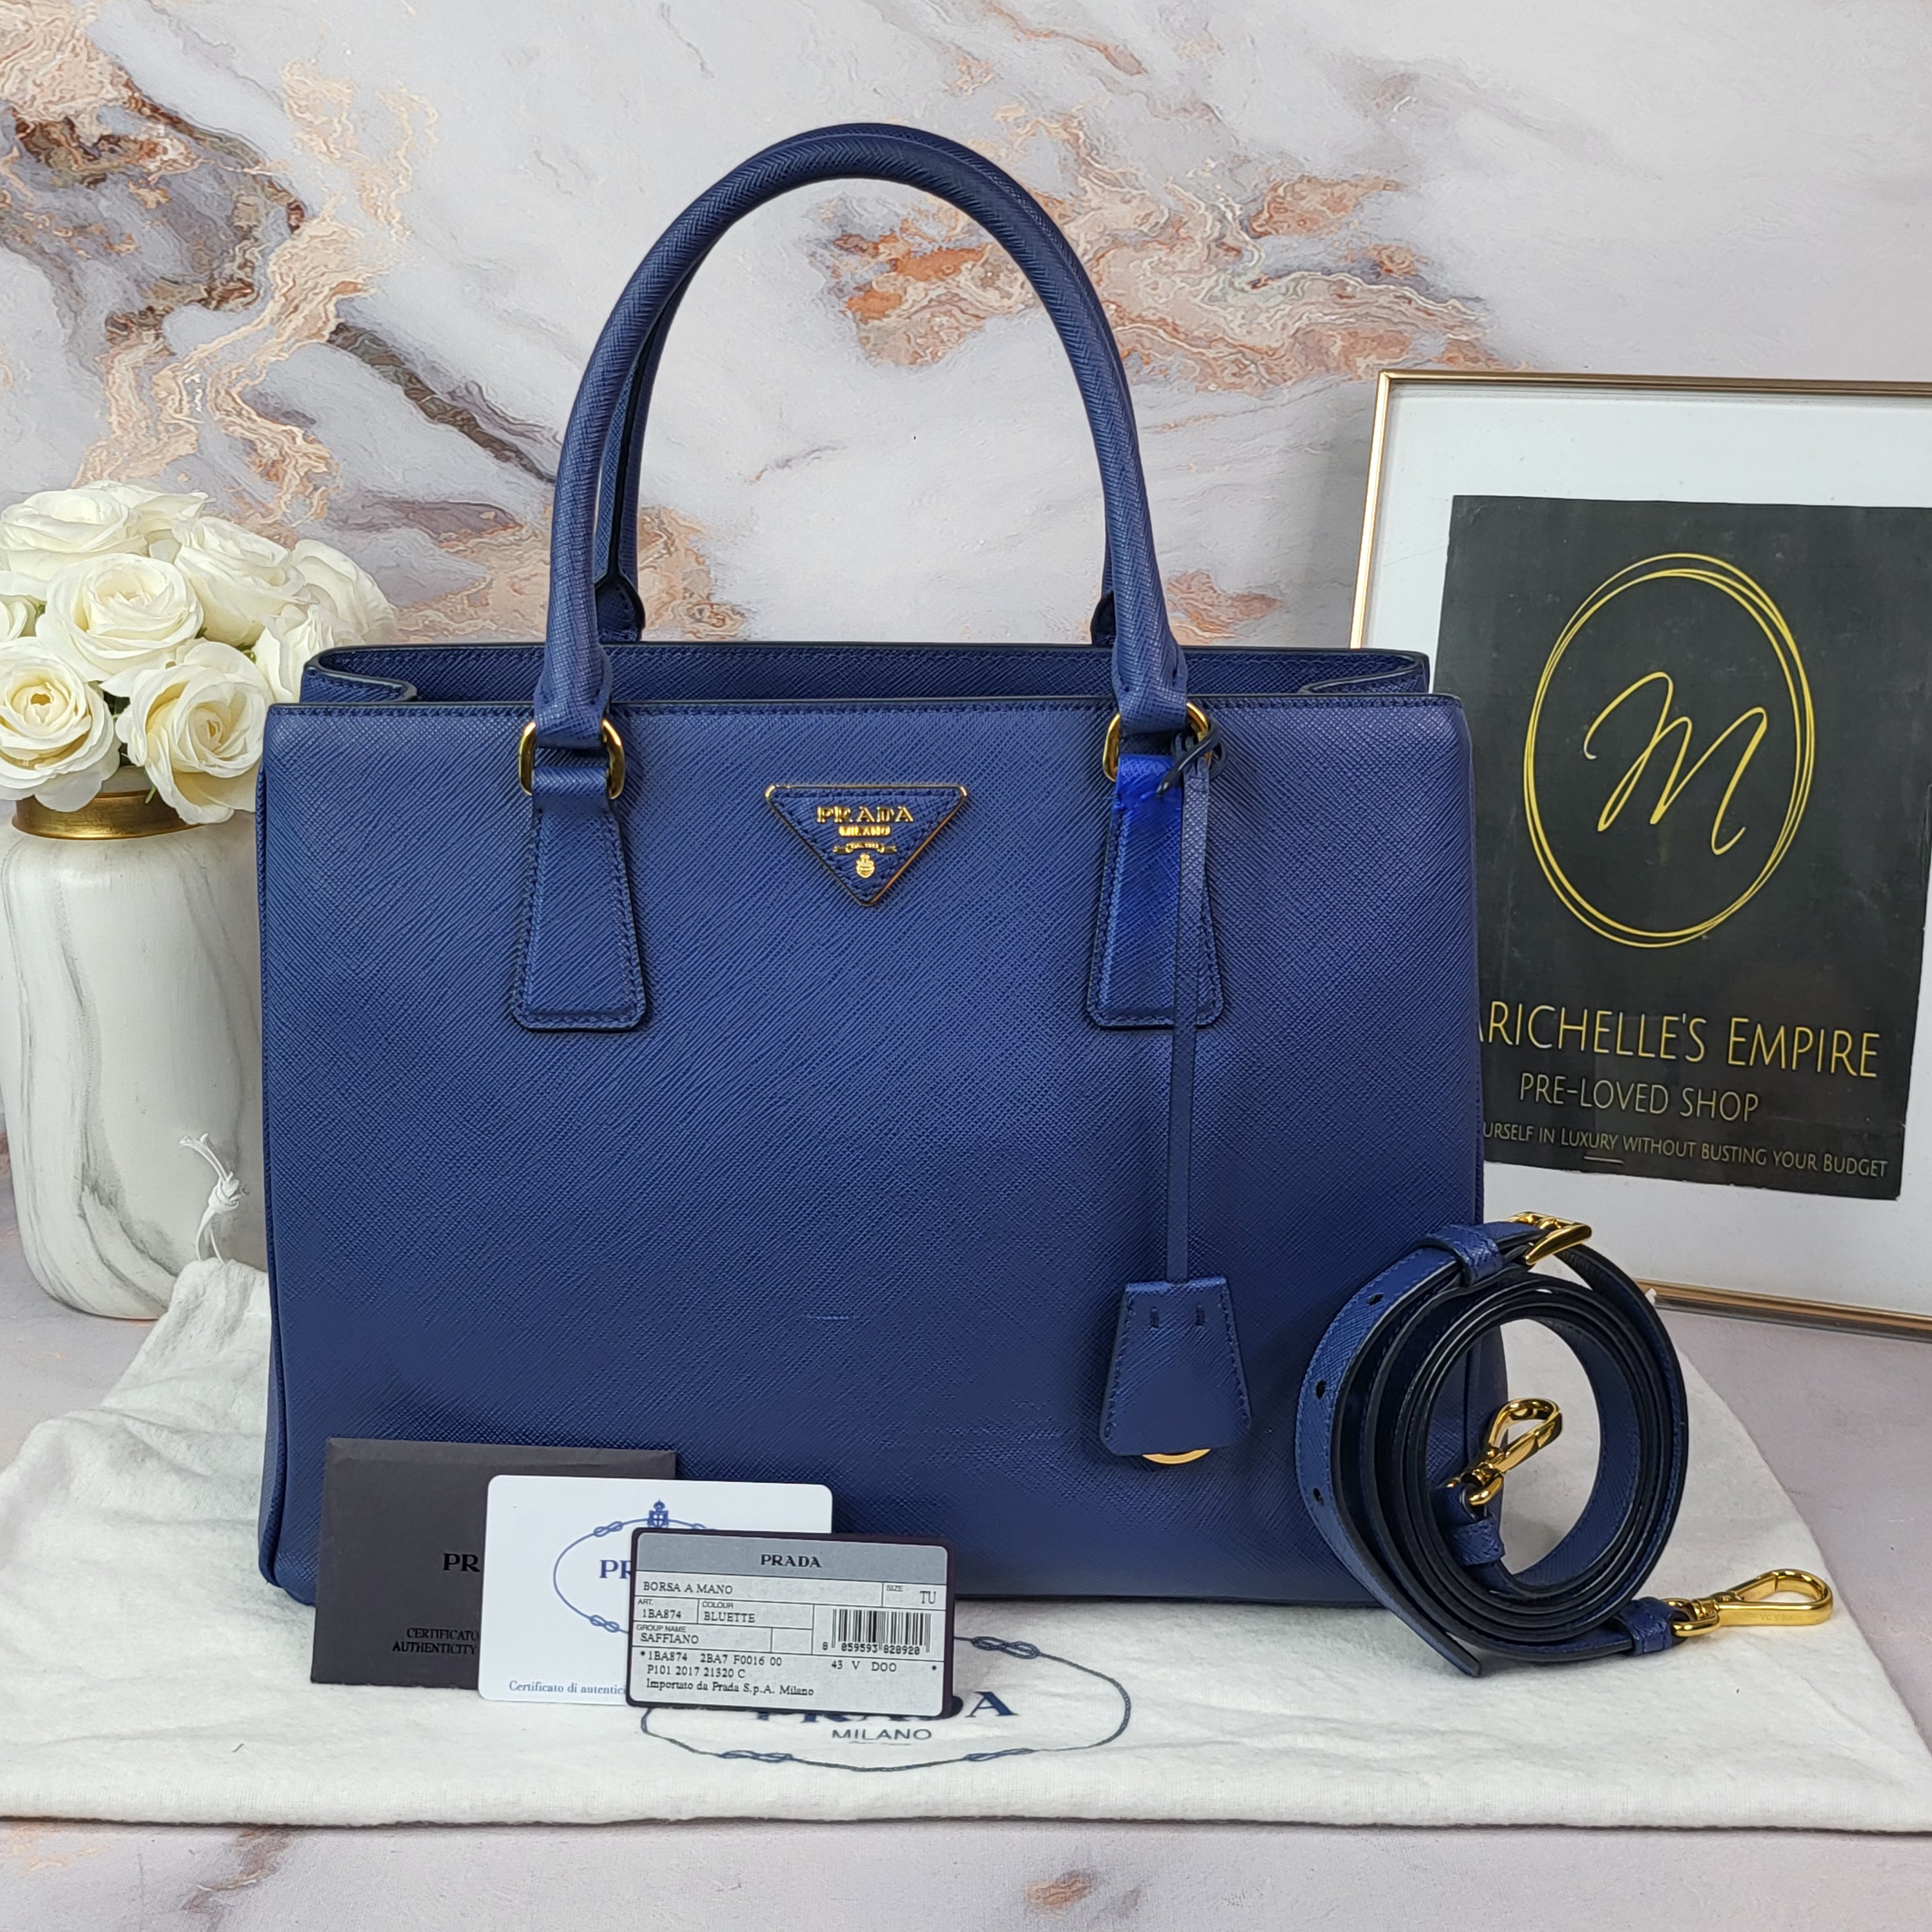 Prada Saffiano Leather Galleria Lux Tote, Blue, Authentic